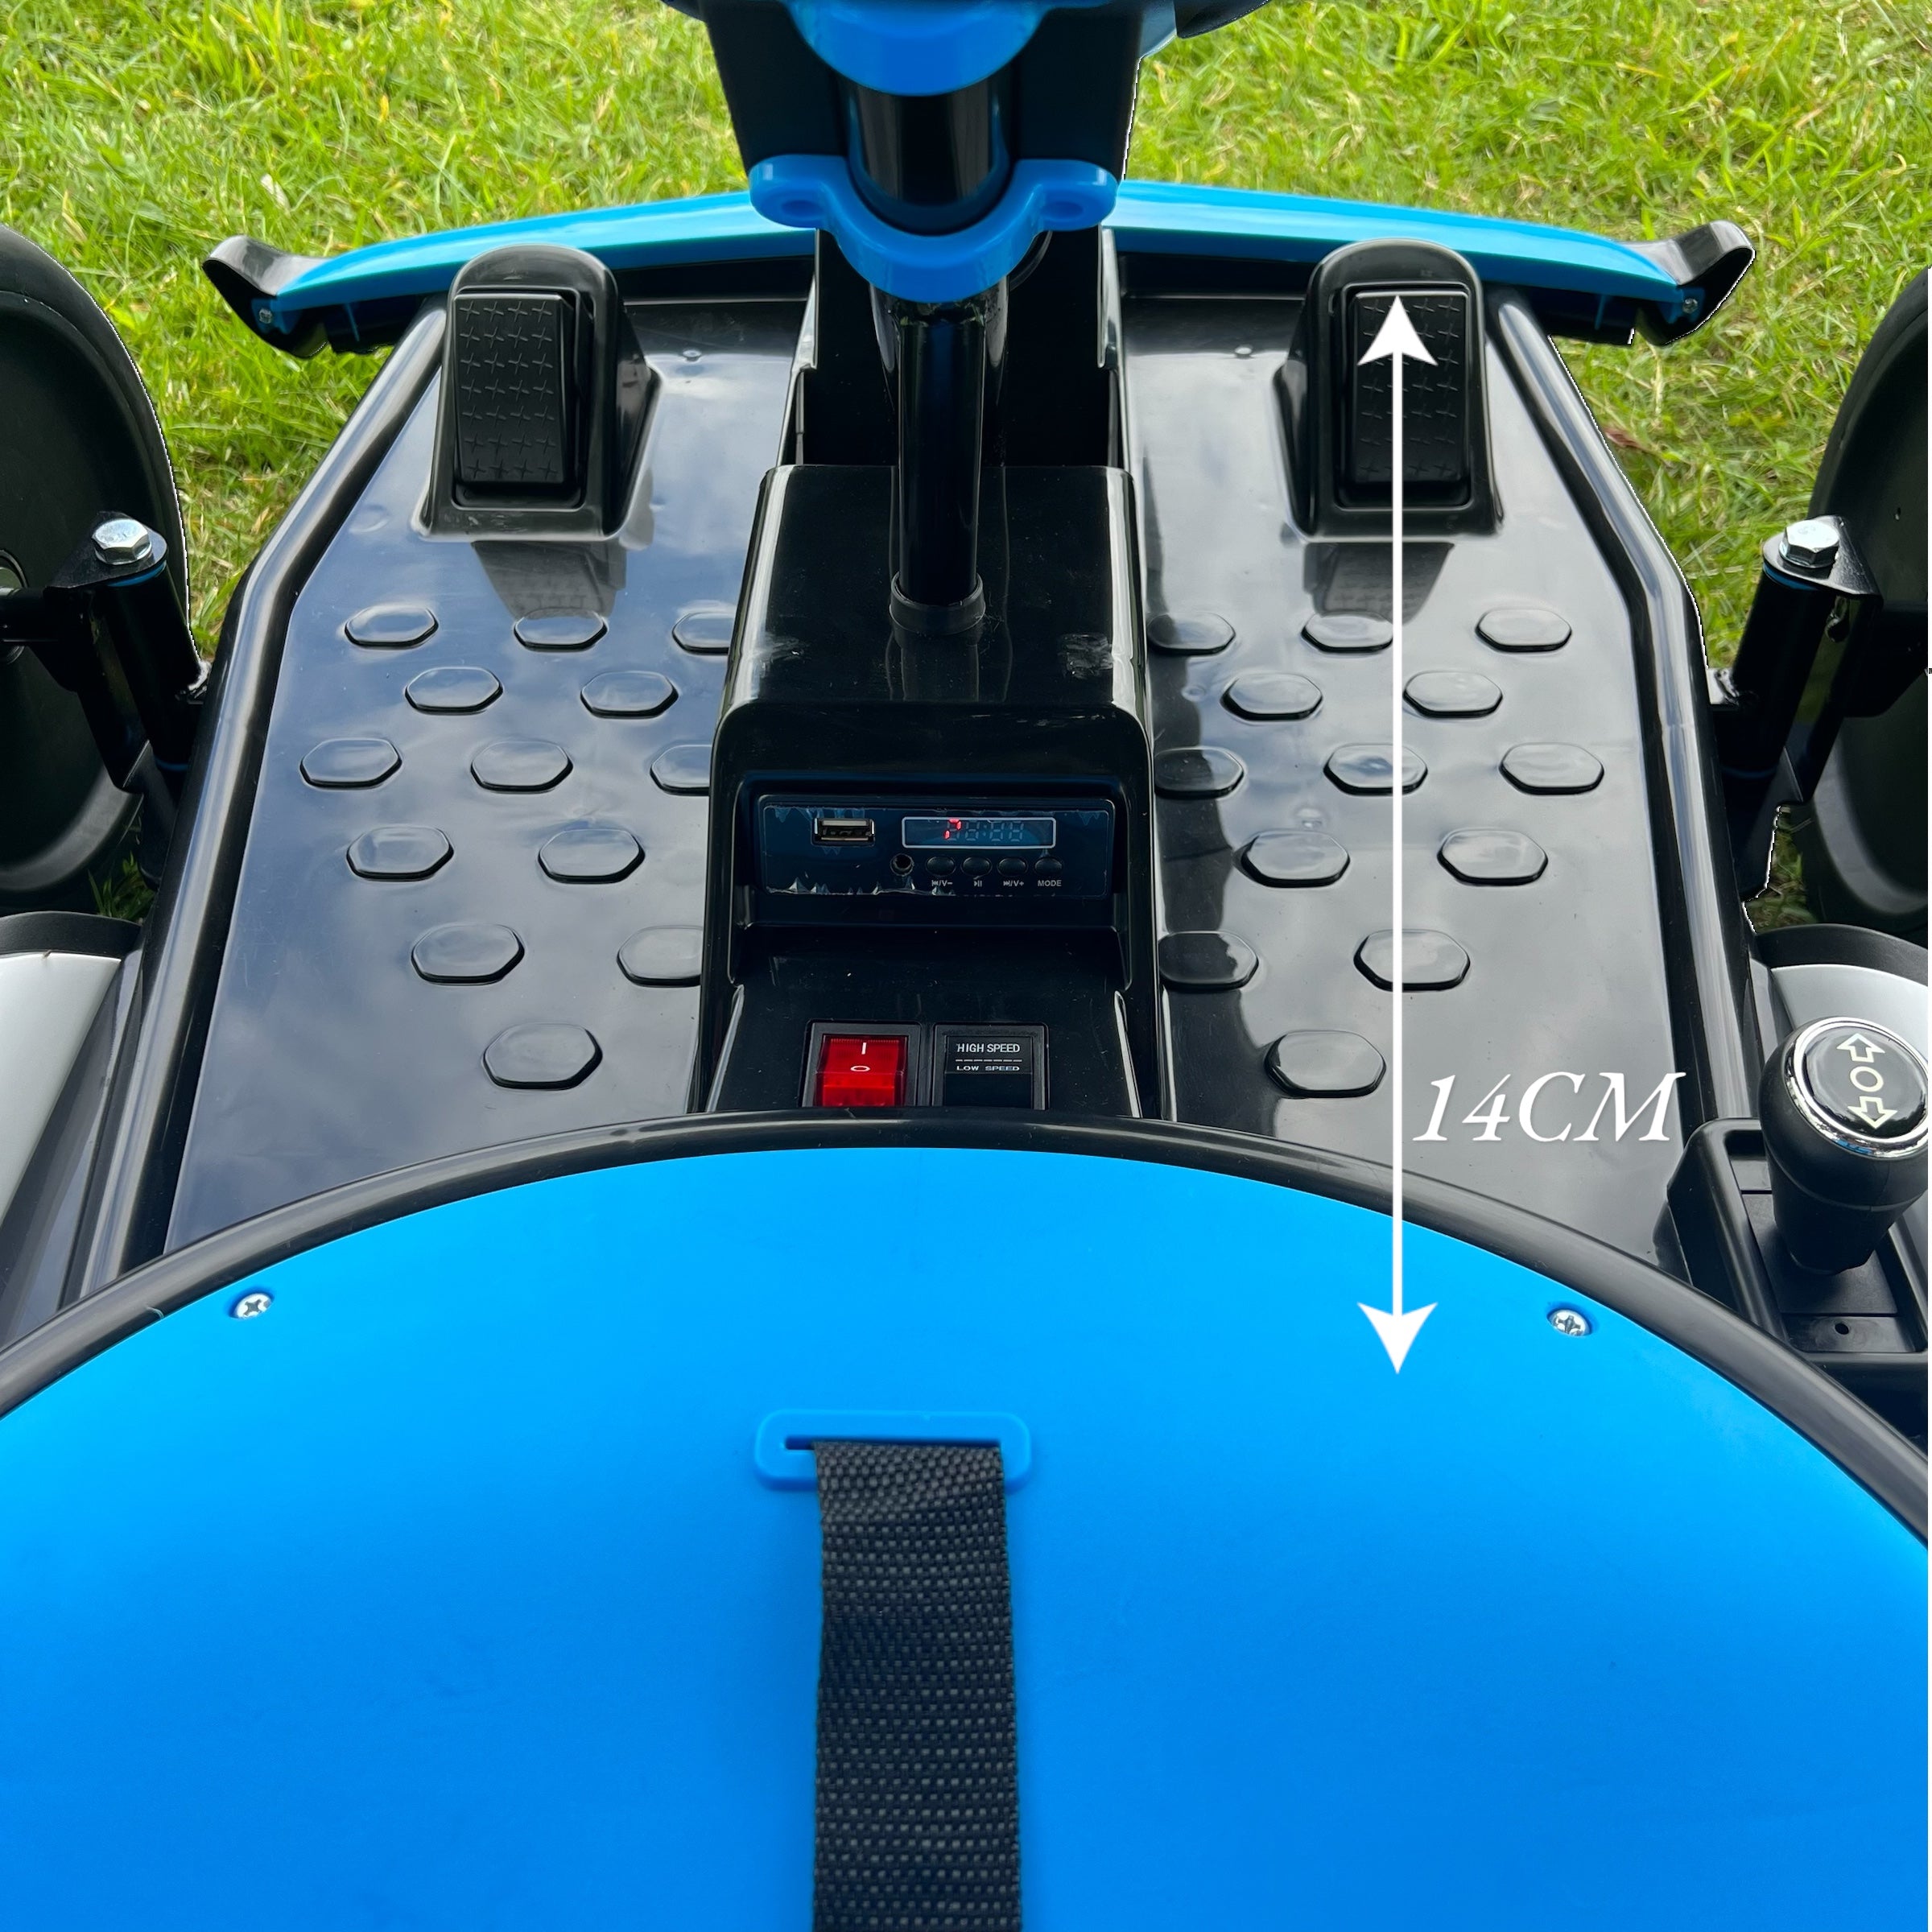 DriftDynamo: High-Performance Drift Go Kart